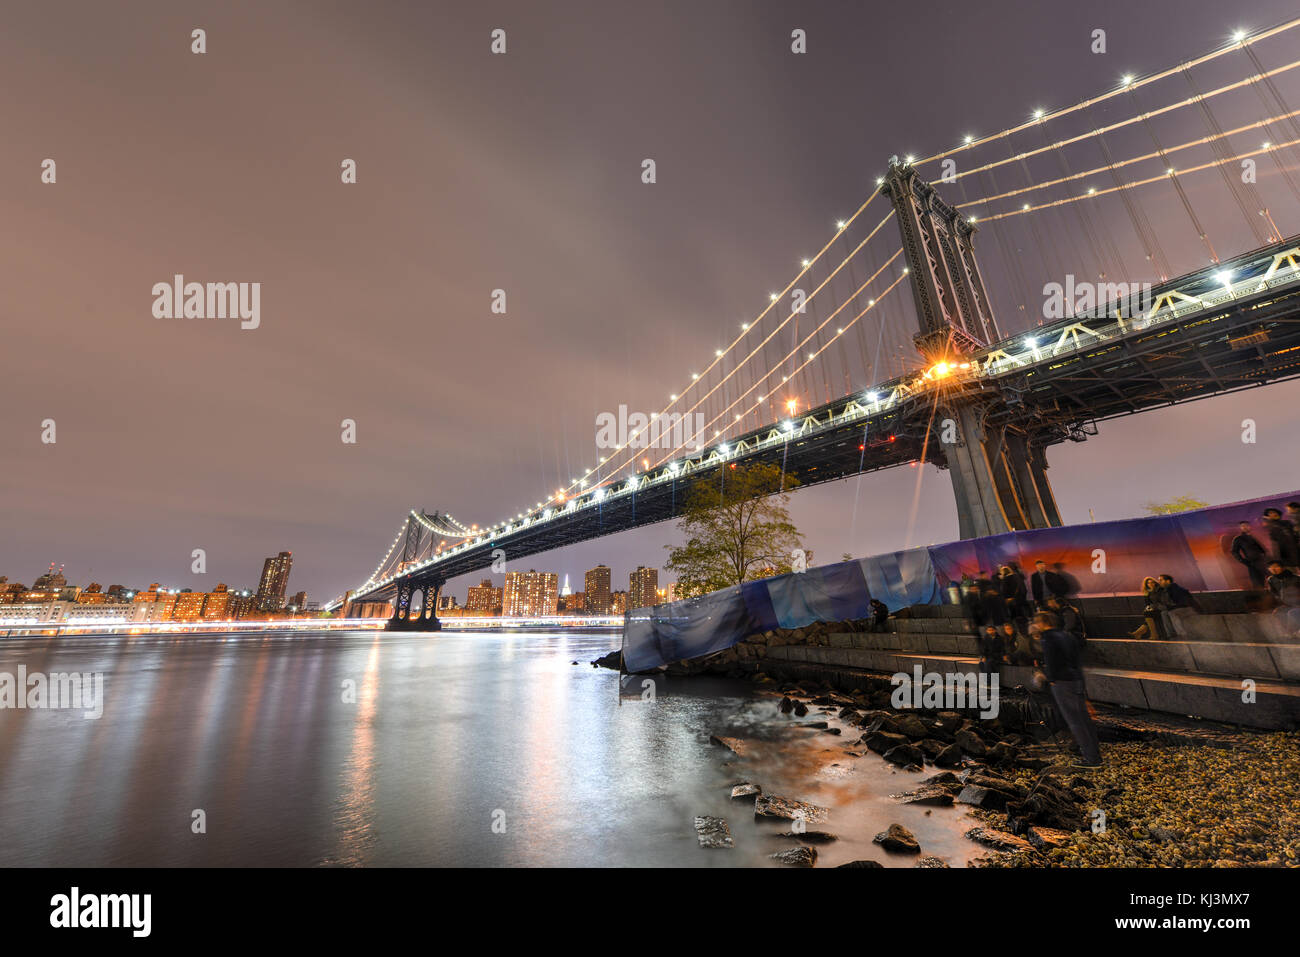 BROOKLYN, NEW YORK - NOVEMBER 8, 2014: Brooklyn Bridge at night viewed from the Brooklyn Bridge Park in New York City. Stock Photo